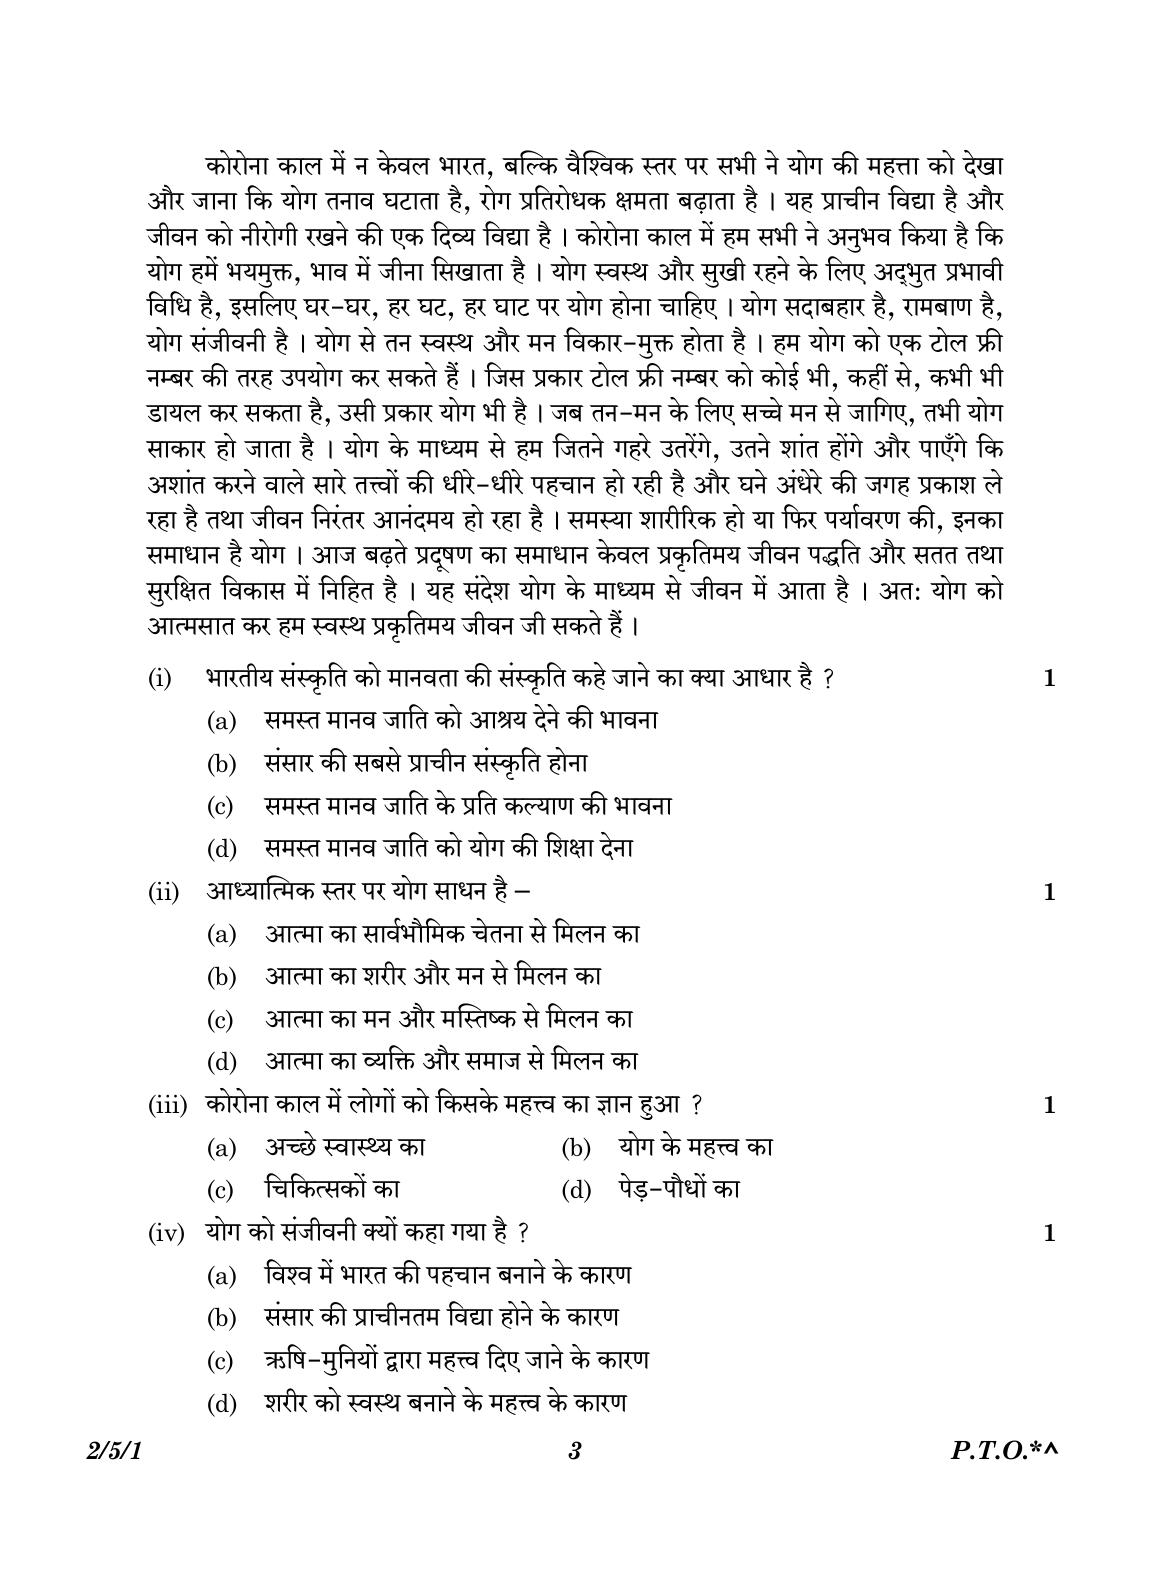 CBSE Class 12 2-5-1 Hindi Core version 2023 Question Paper - Page 3